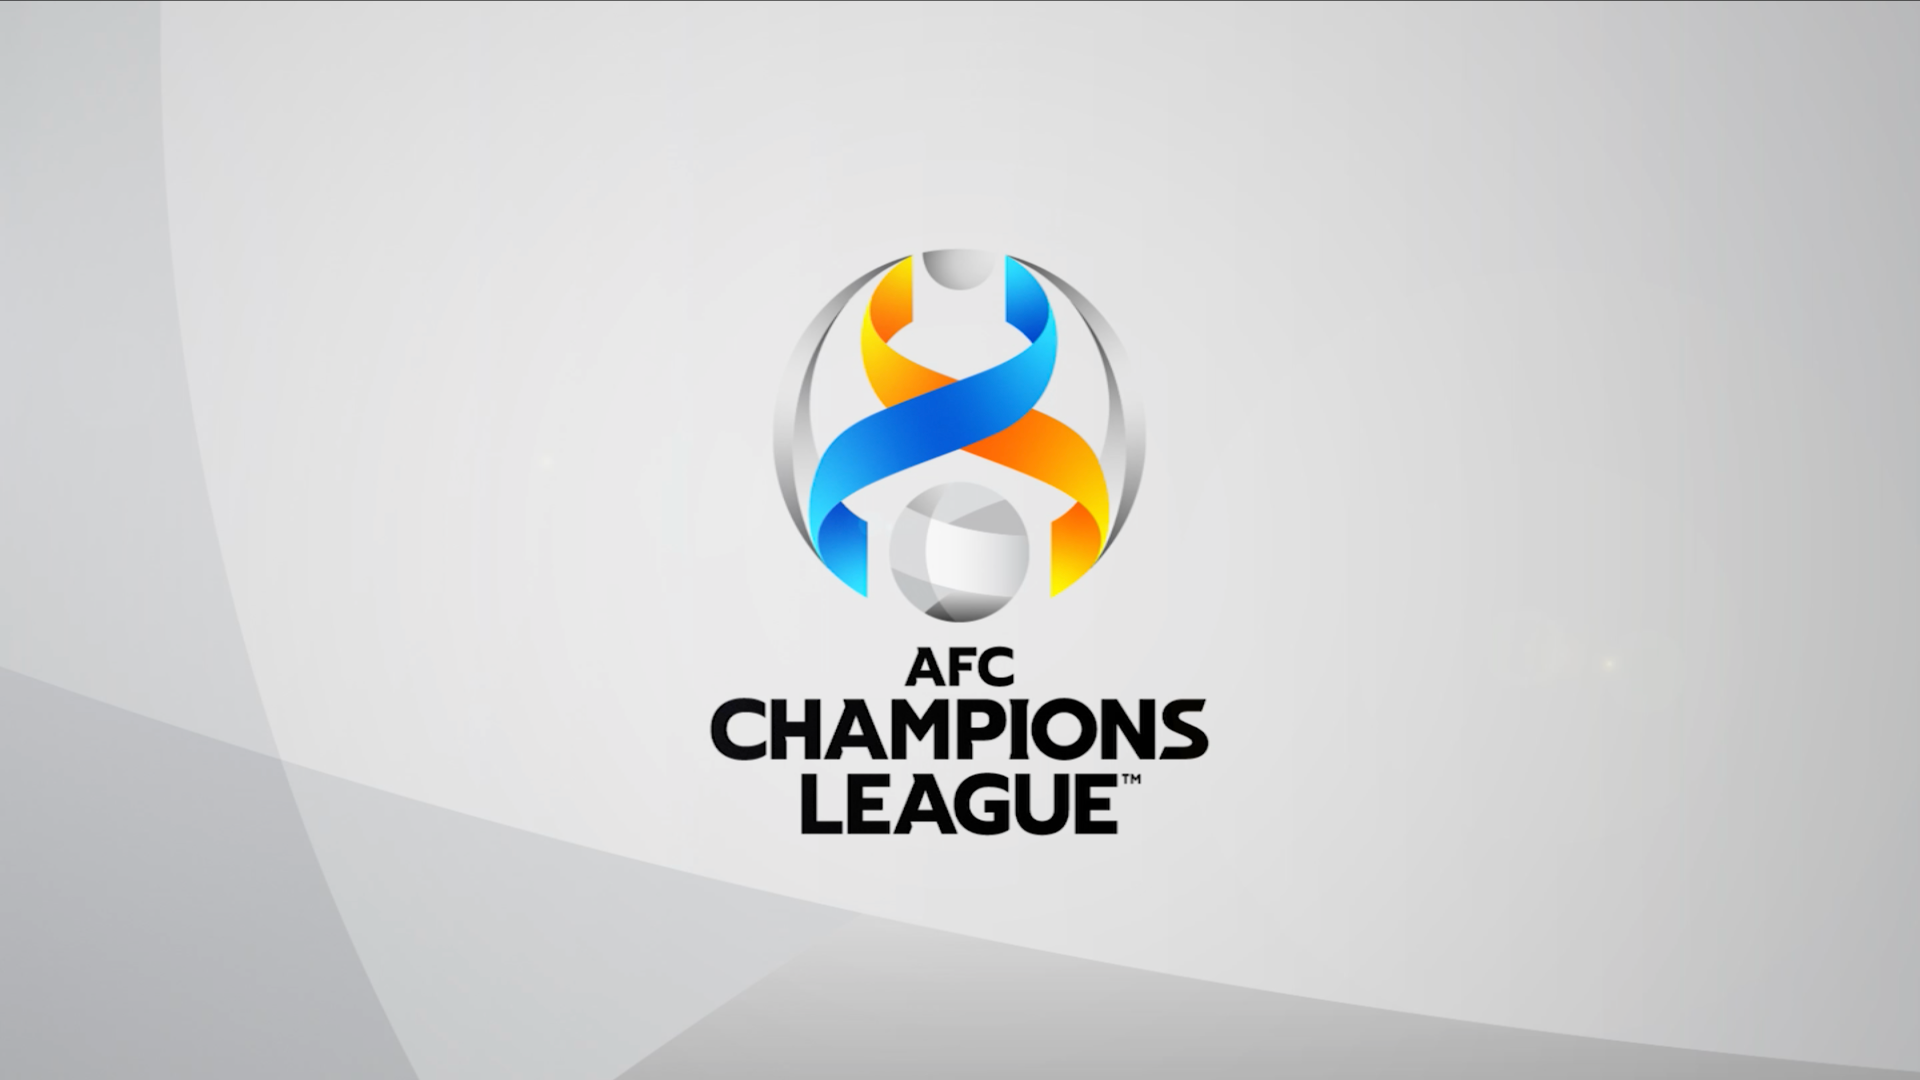 ACL - Full Match - Group C  Al Ittihad (KSA) vs Sepahan SC (IRN